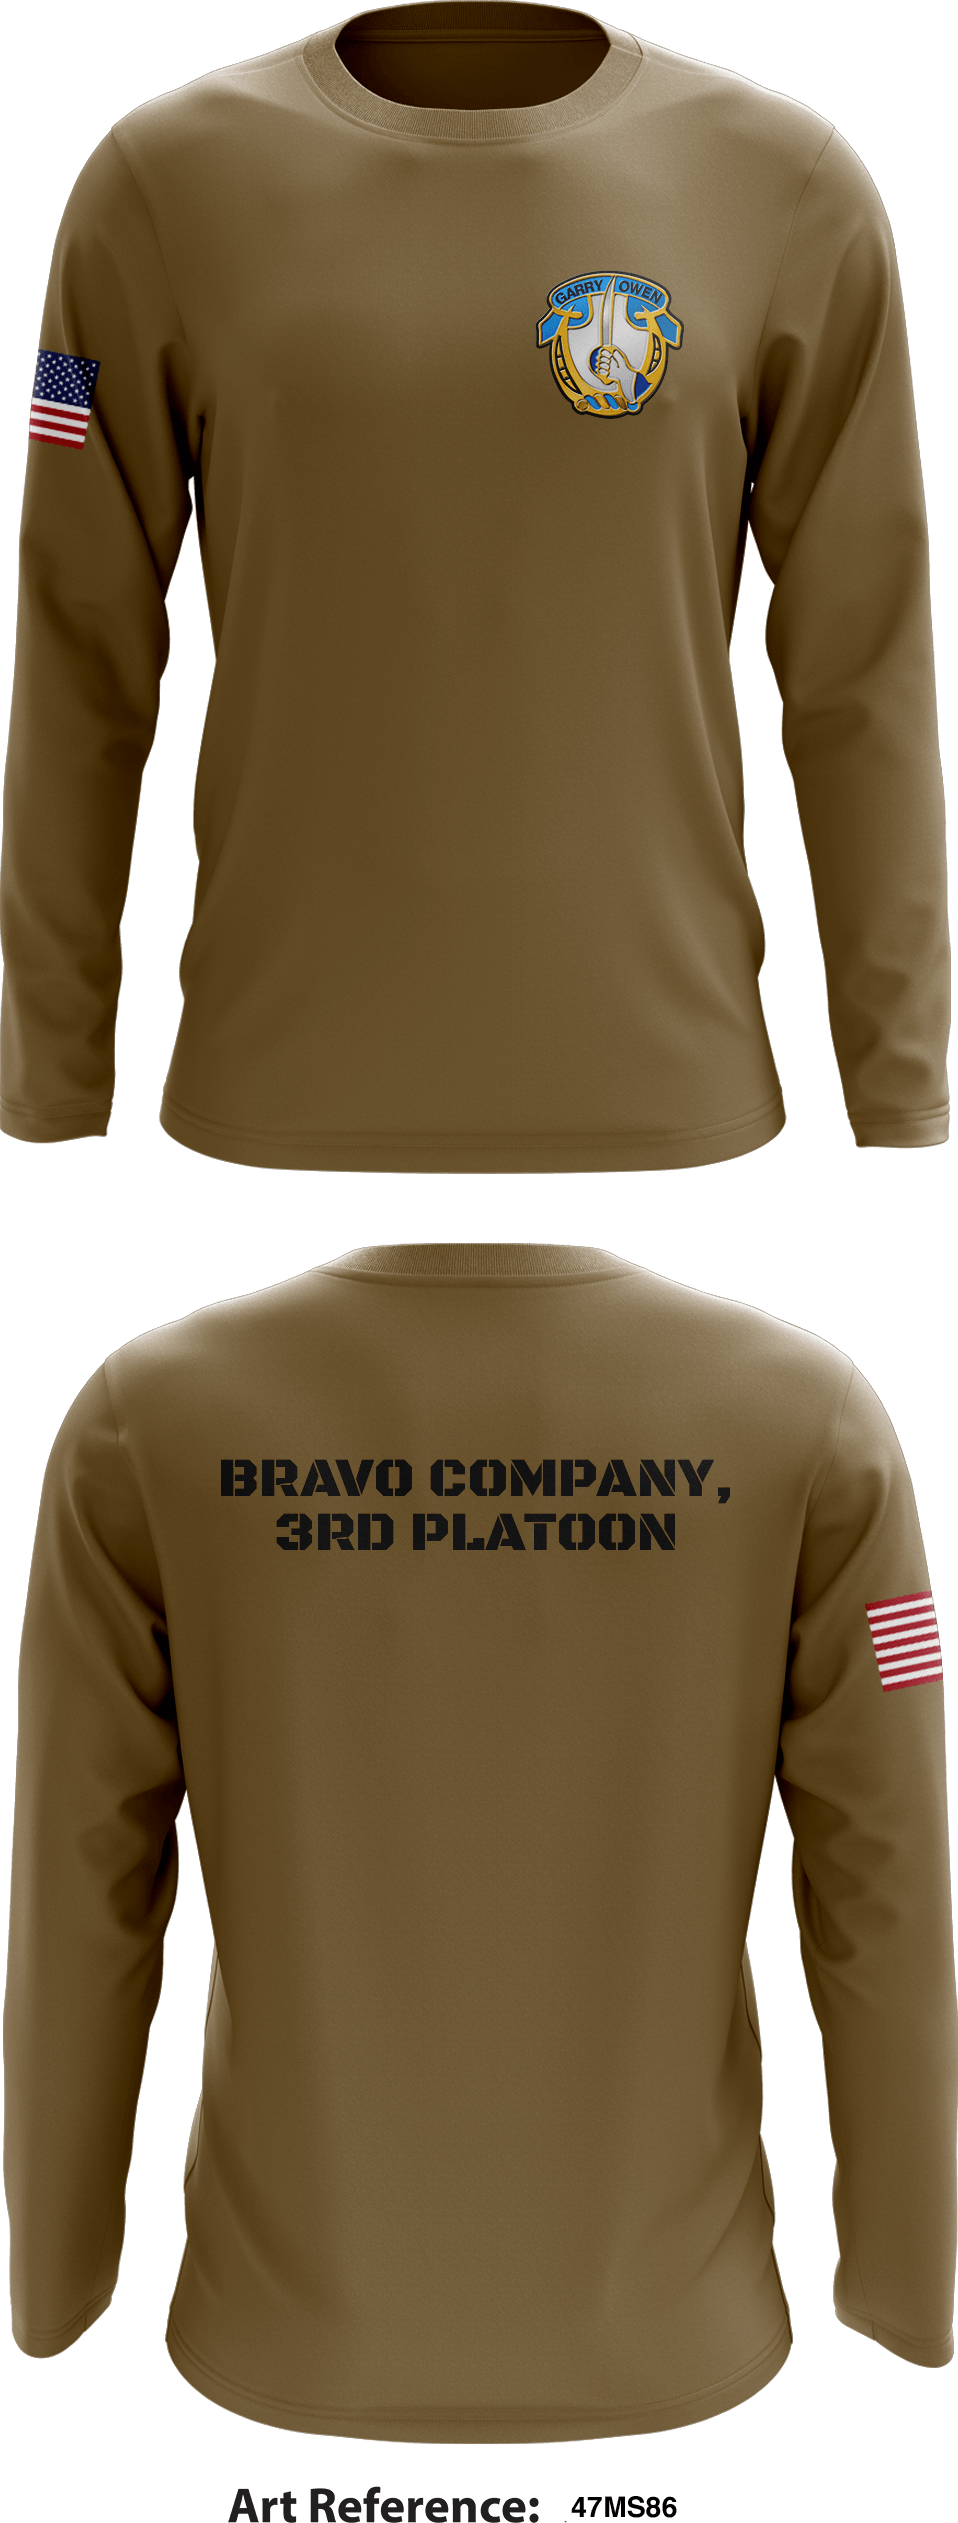 Bravo Company, 3rd Platoon Store 1 Core Men's LS Performance Tee - 47MS86